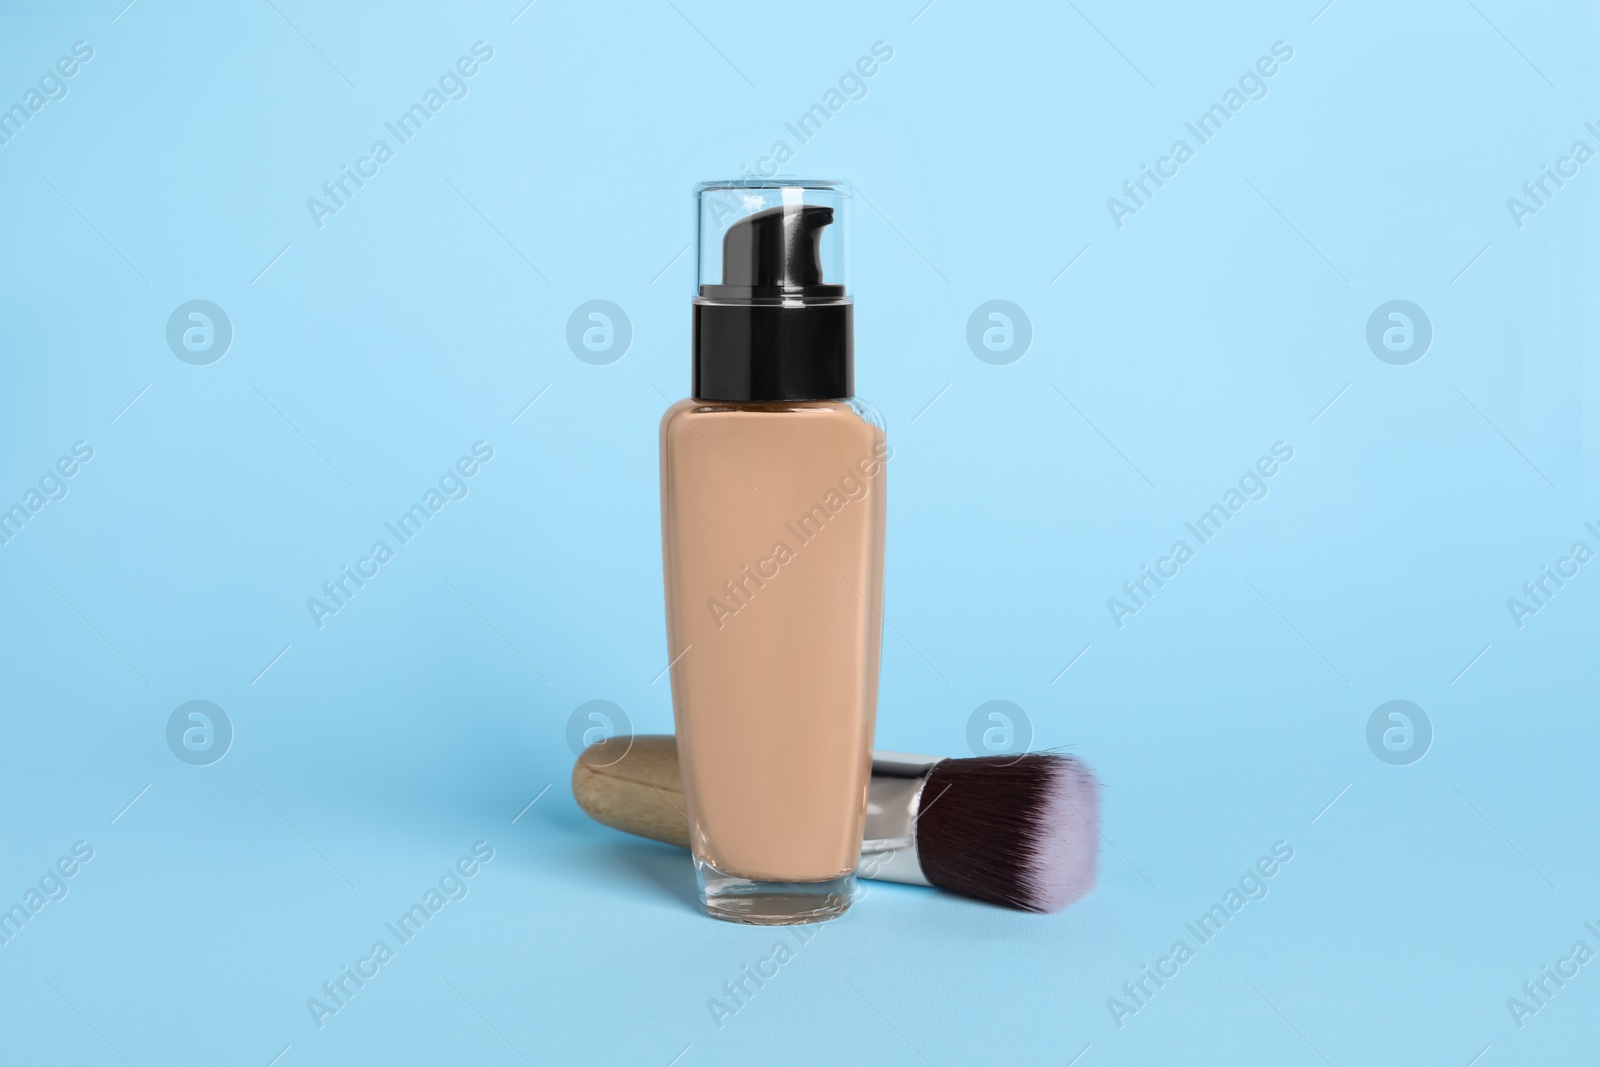 Photo of Bottle of skin foundation and brush on light blue background. Makeup product